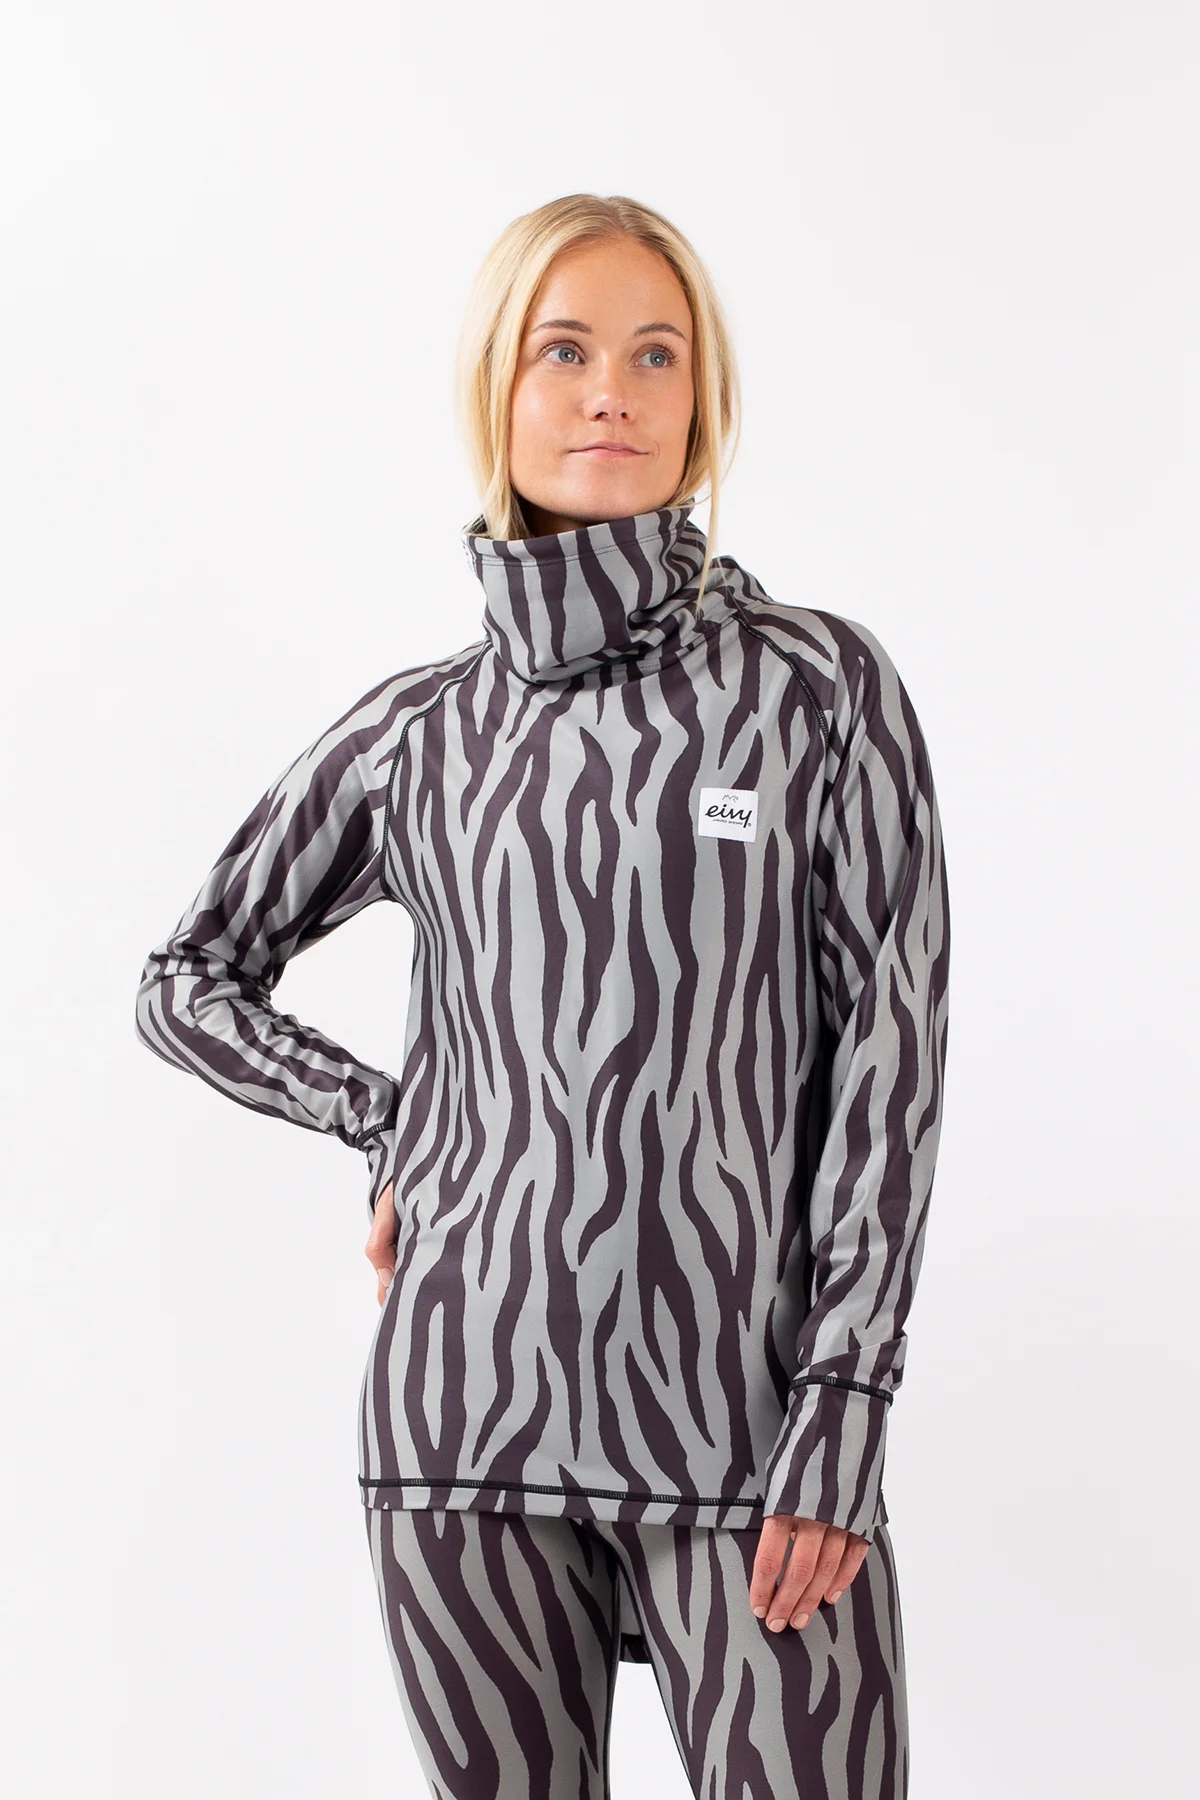 Eivy Icecold Tights 2020 Base Layer Pants Leopard - Shop Sydney